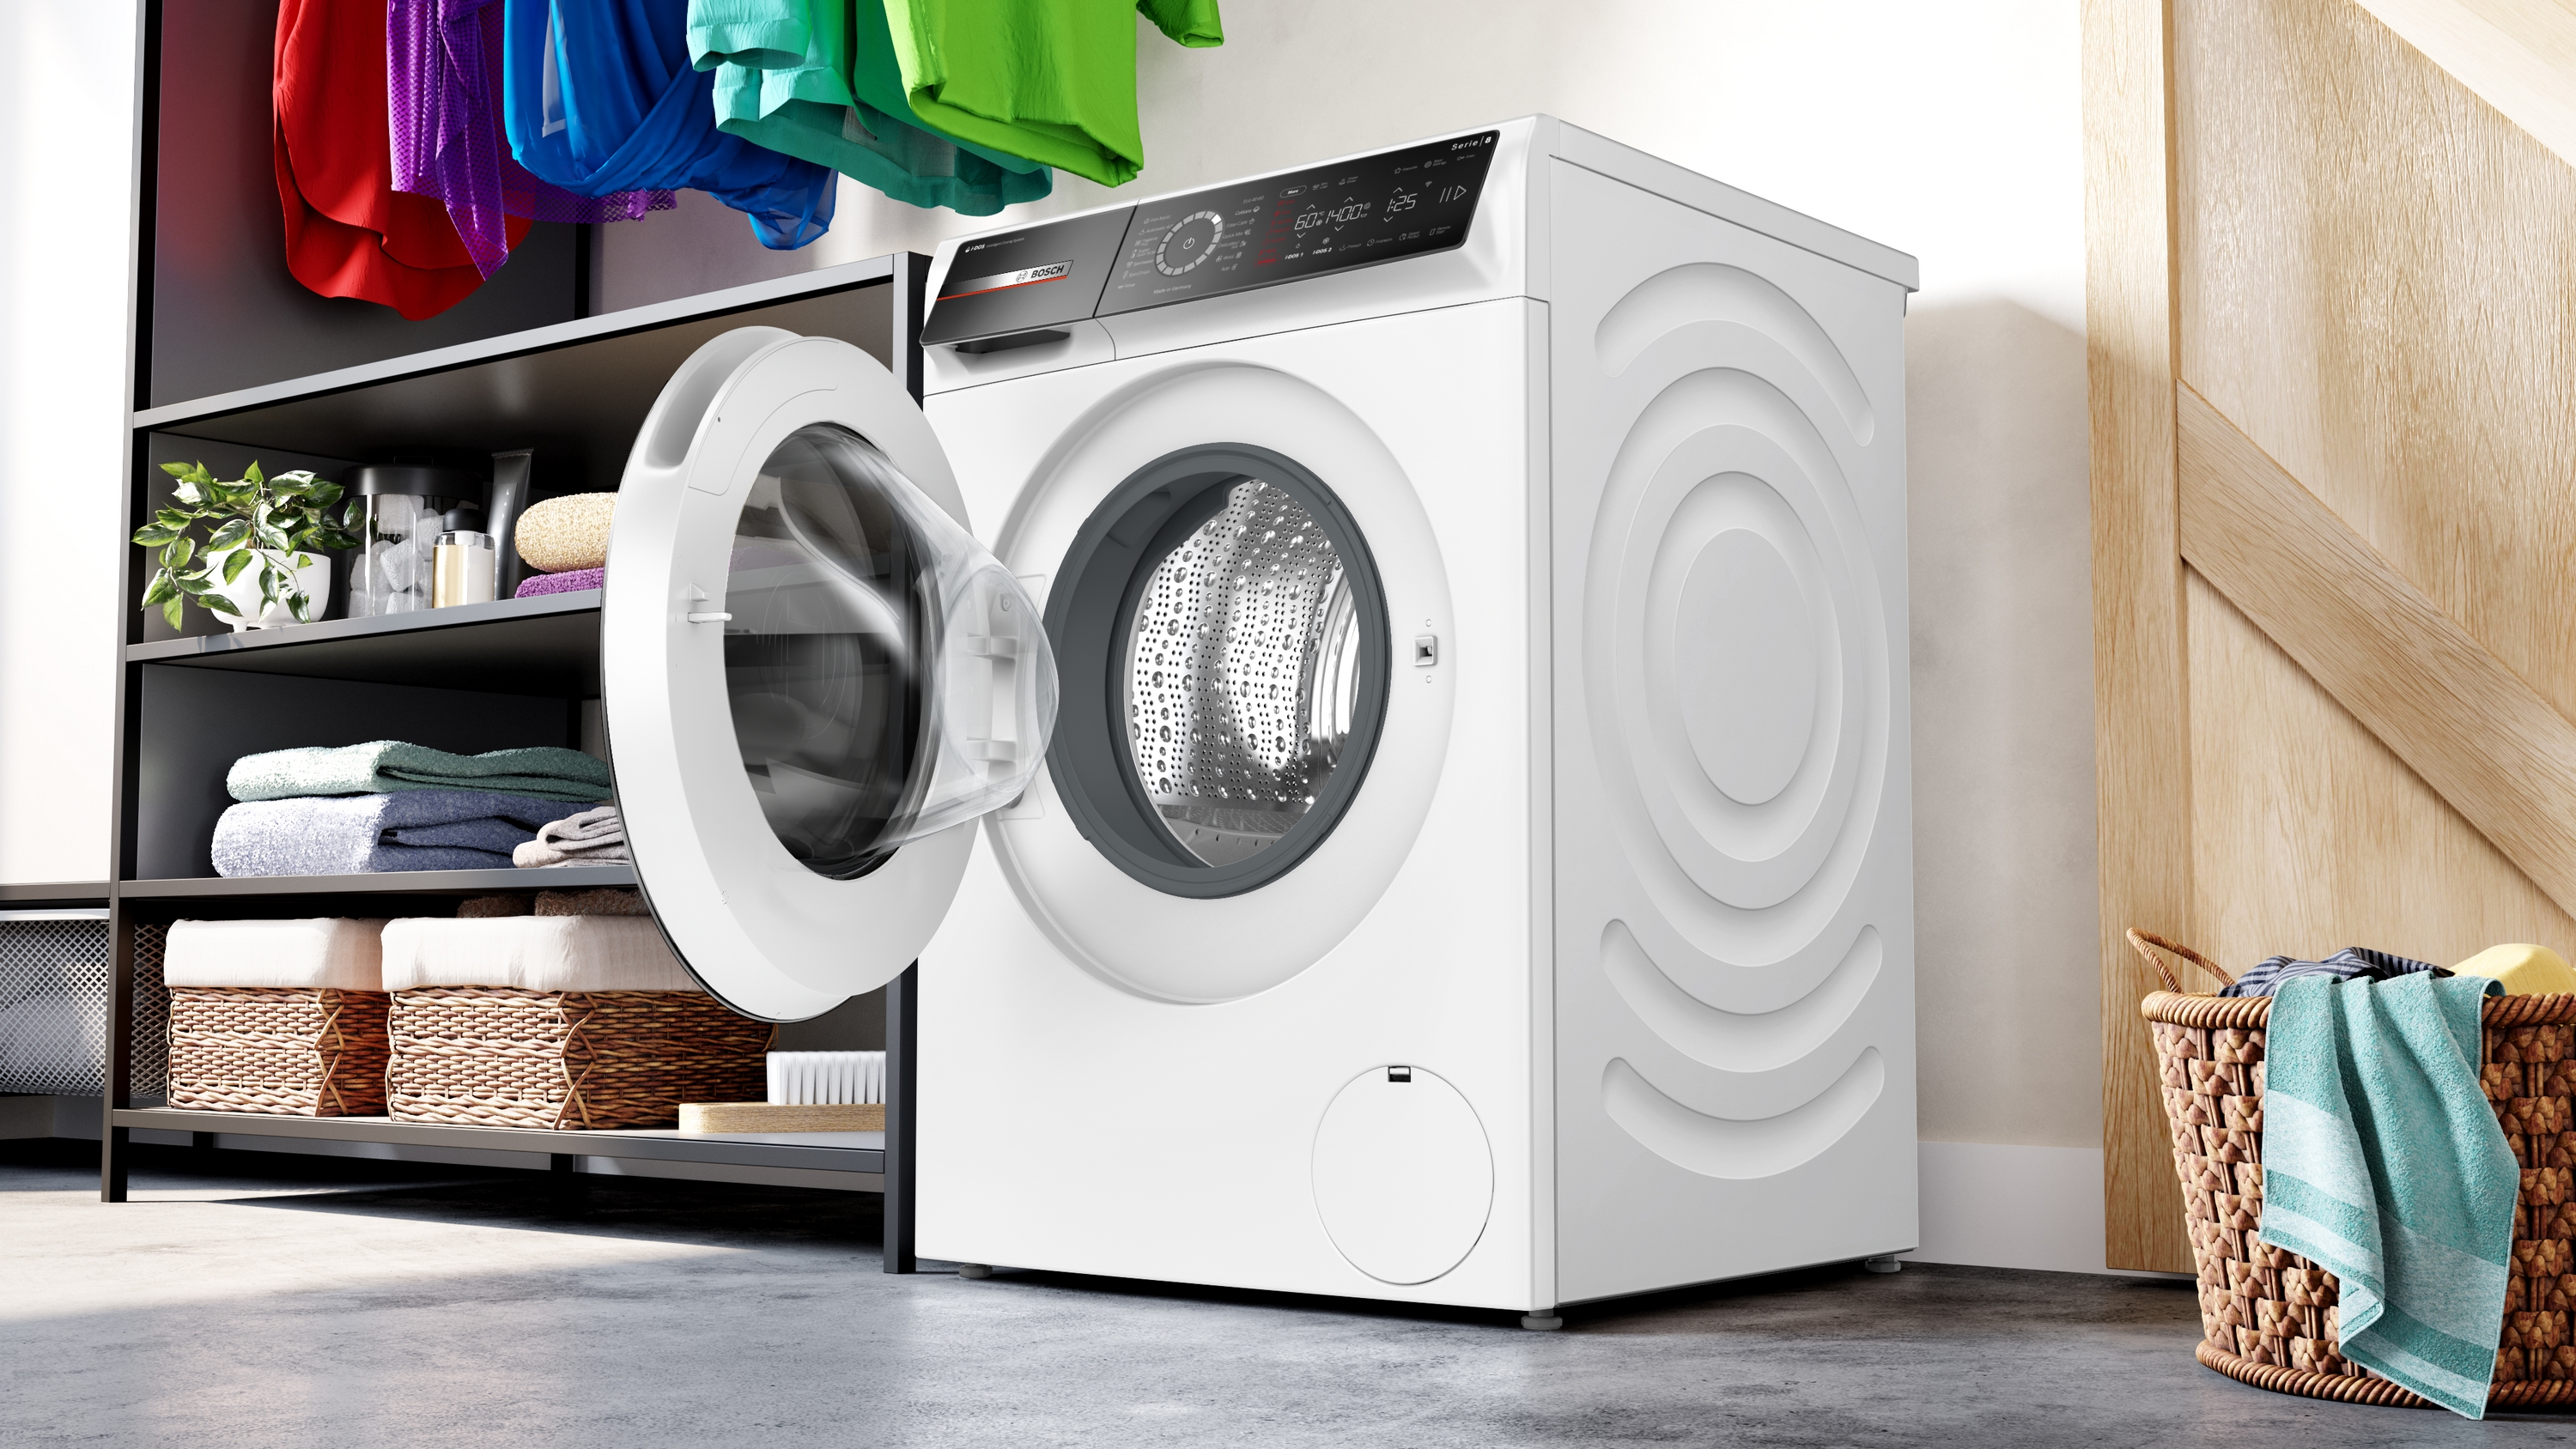 Serija 8, Mašina za pranje veša, punjenje spreda, 10 kg, 1400 okr, WGB254A0BY